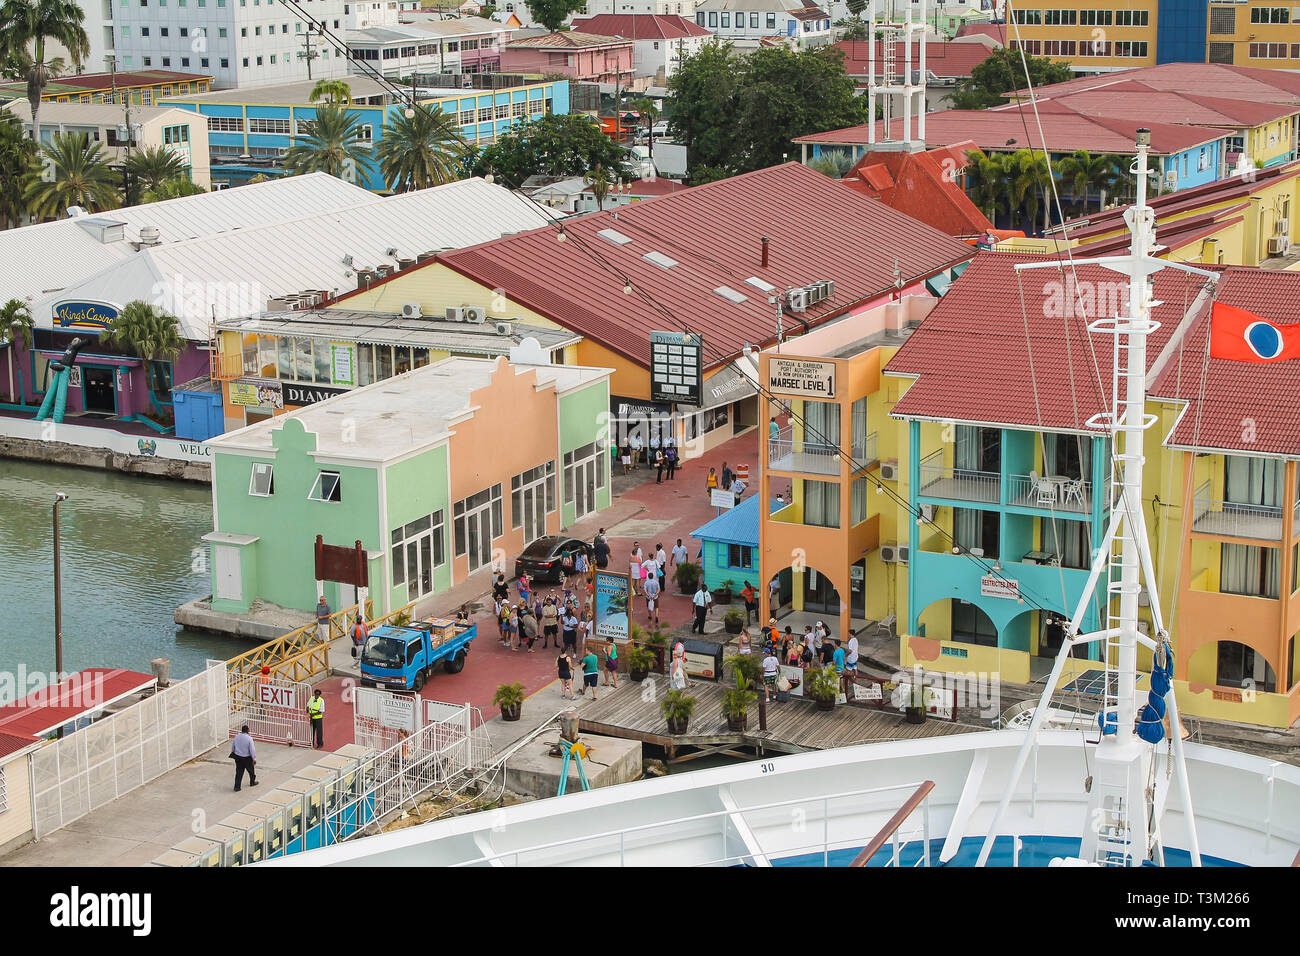 St. John's, Antigua - October 31, 2012: The cruise port of St. John's in Antigua - Caribbean Stock Photo